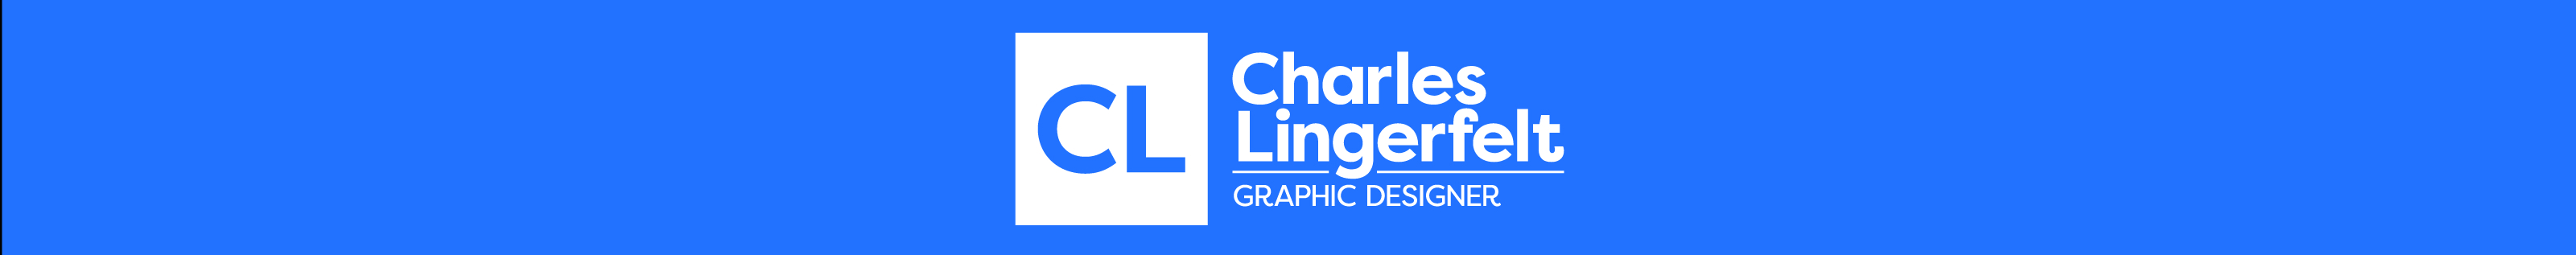 Banner de perfil de Charles Lingerfelt